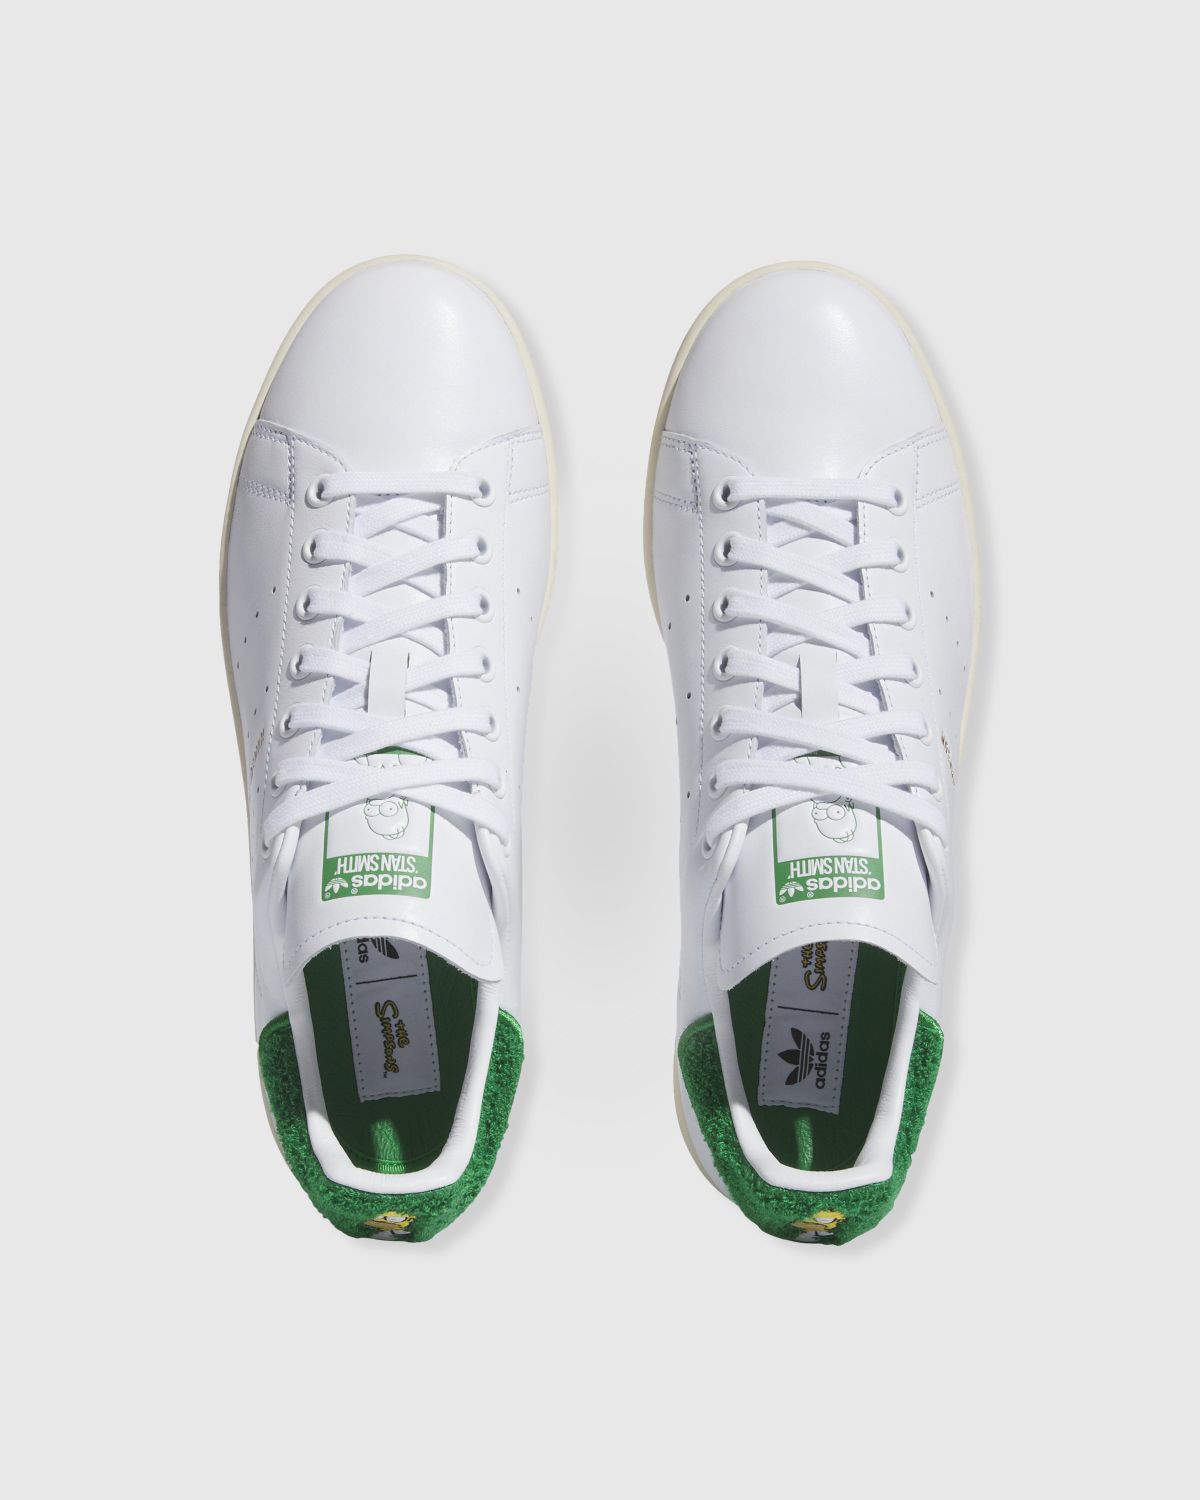 Adidas – Stan Smith Homer Simpson White/Green | Highsnobiety Shop